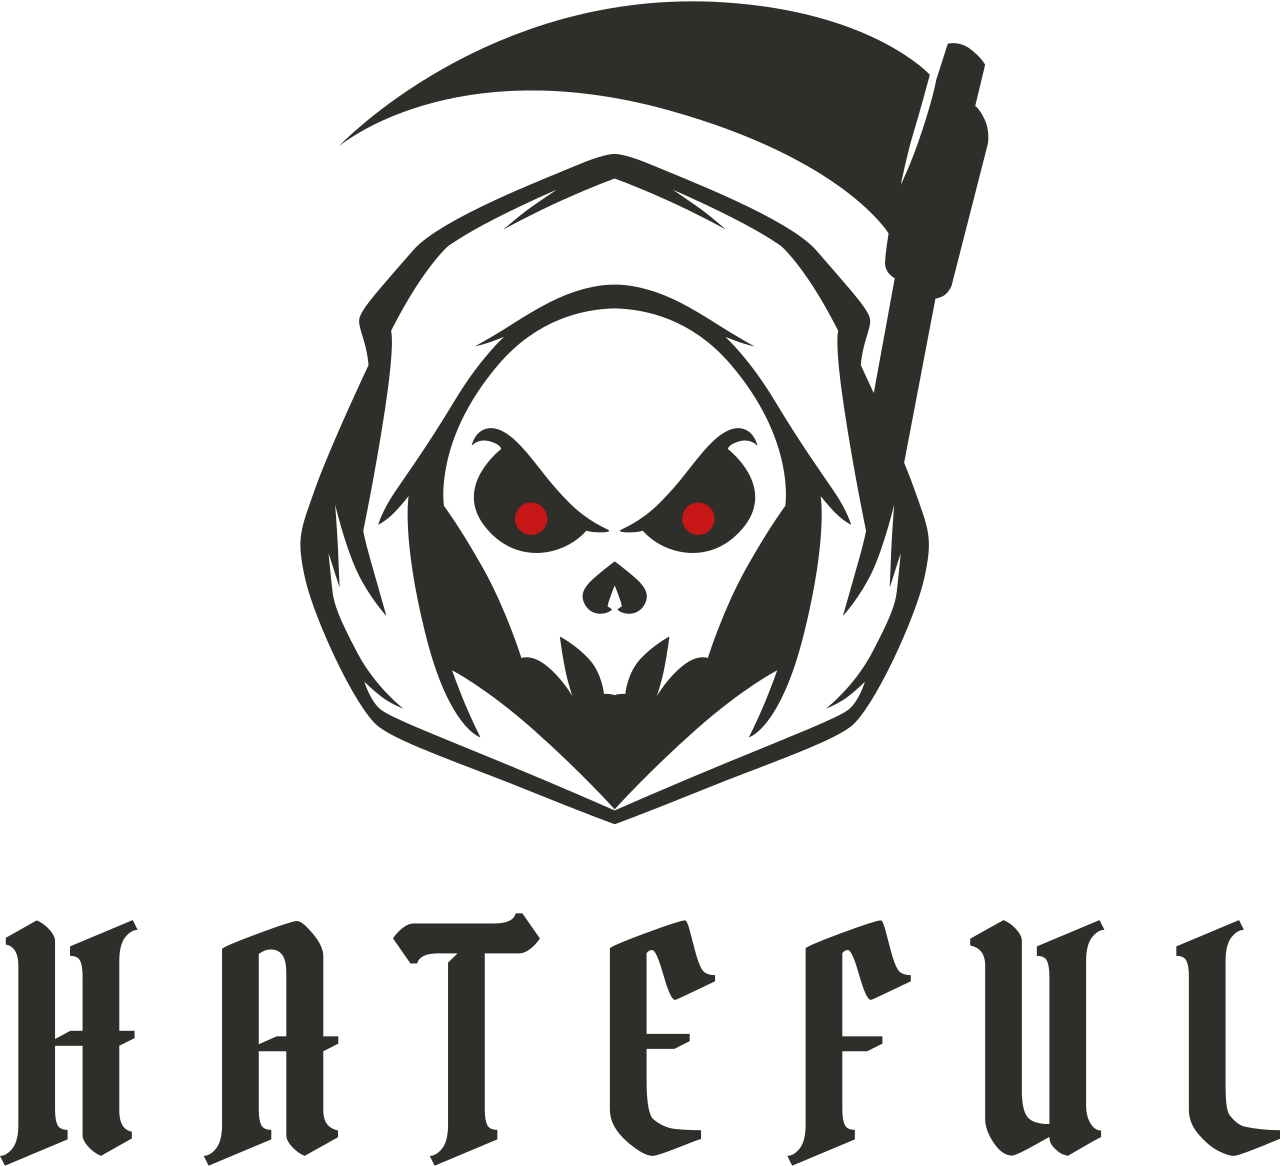 Hateful's logo